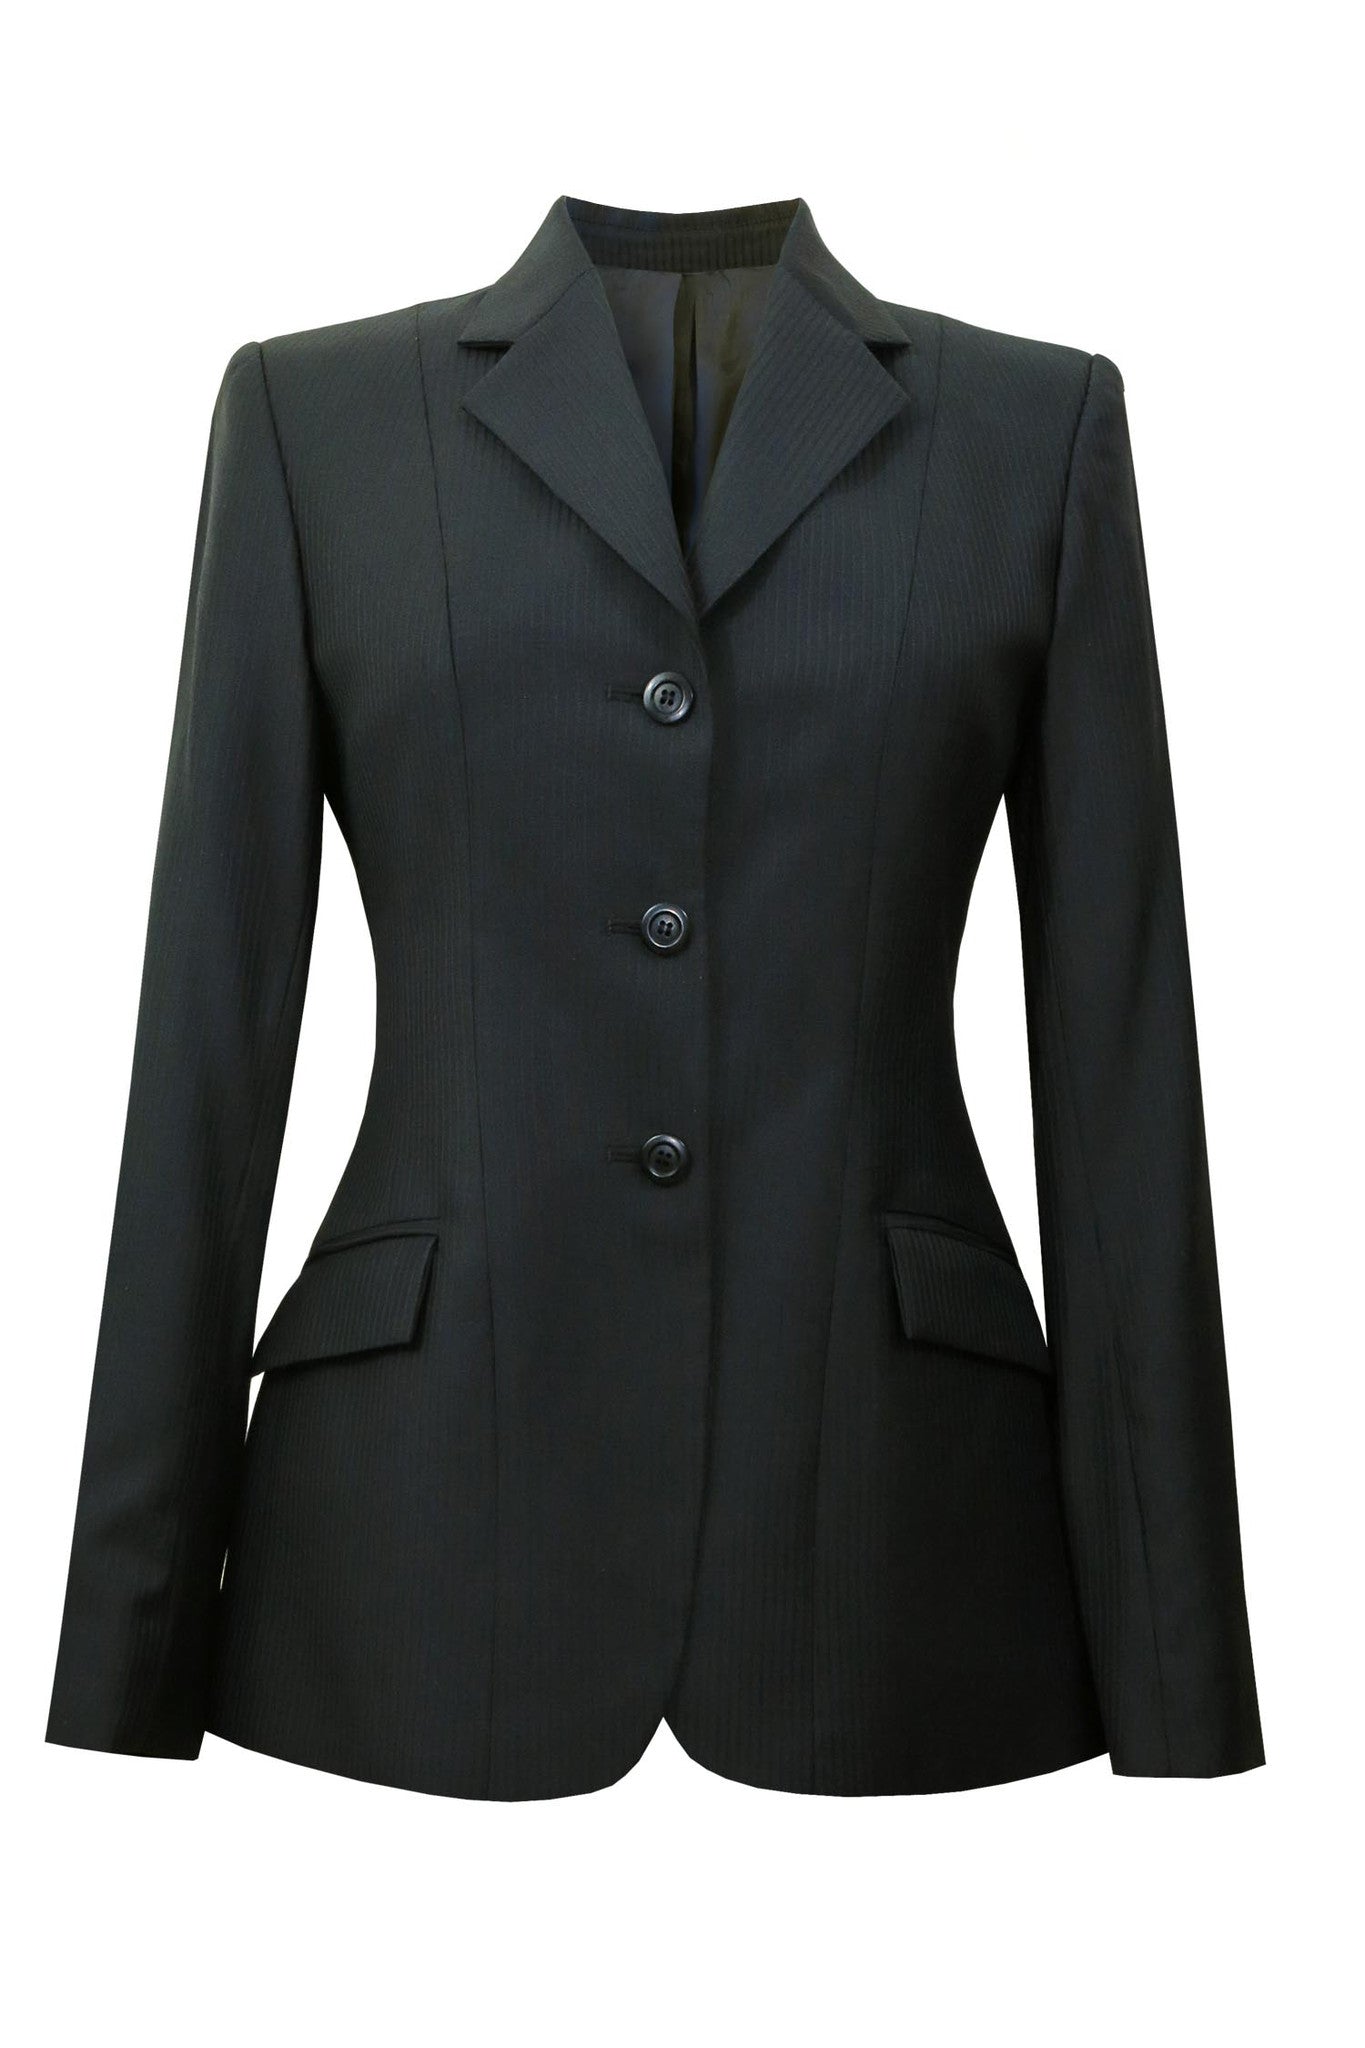 Black wool jacket with thin tonal stripes. 